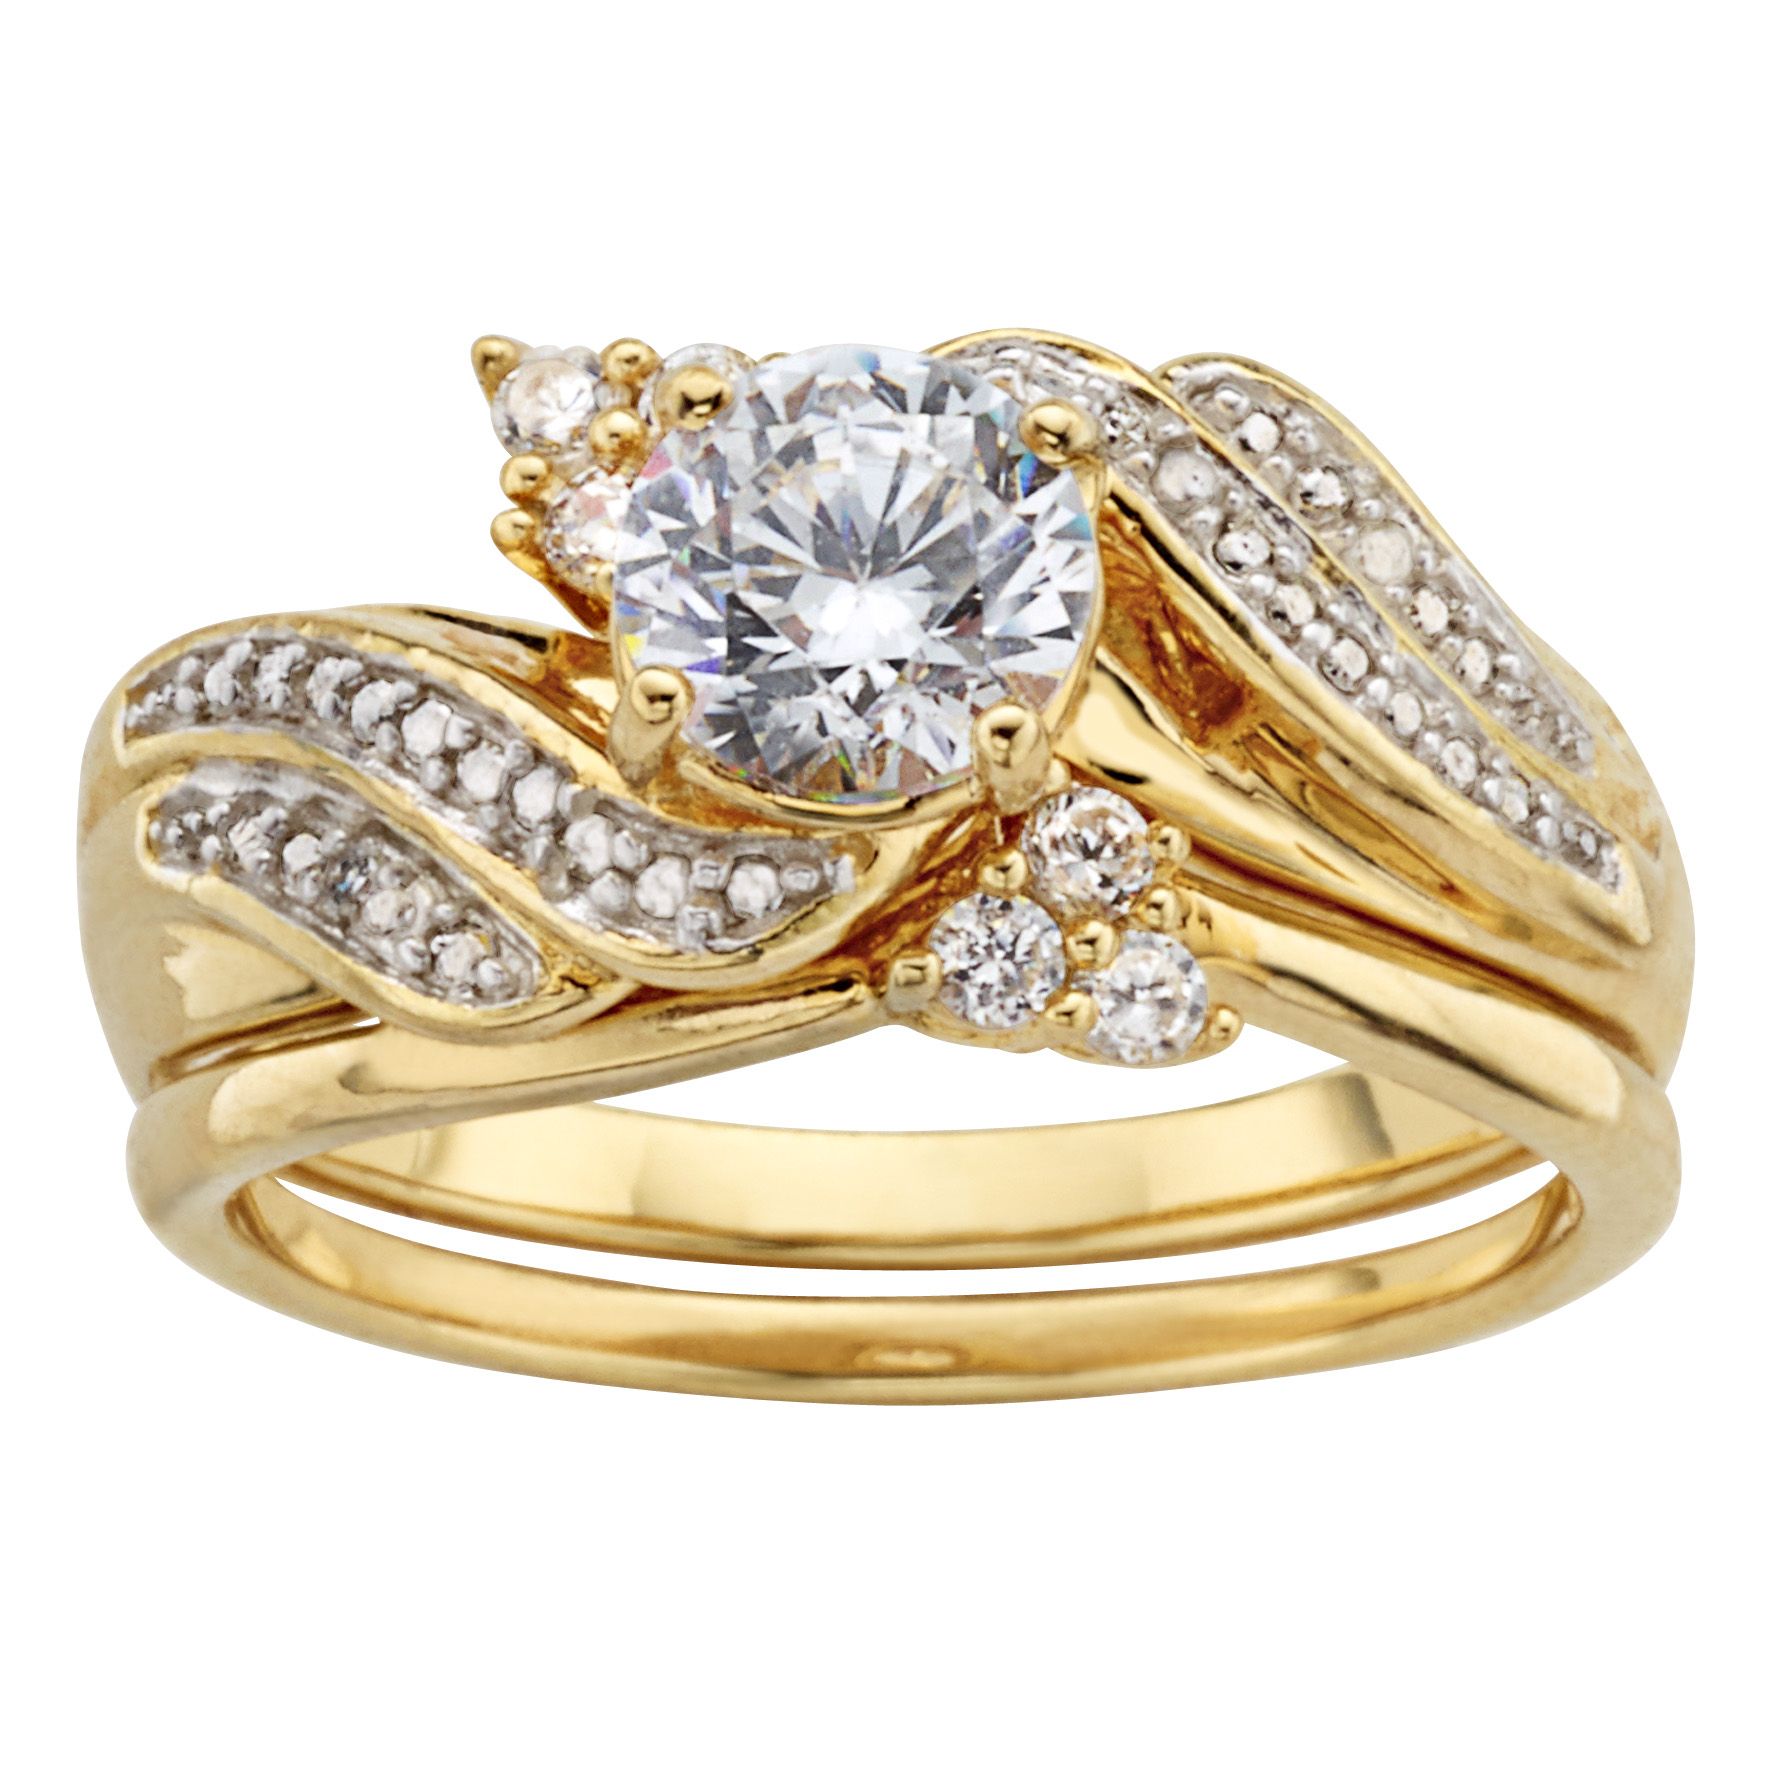 Fingerhut 18k Gold Over Sterling Silver Round Cz And Diamond Accent Interlocking Bridal Set